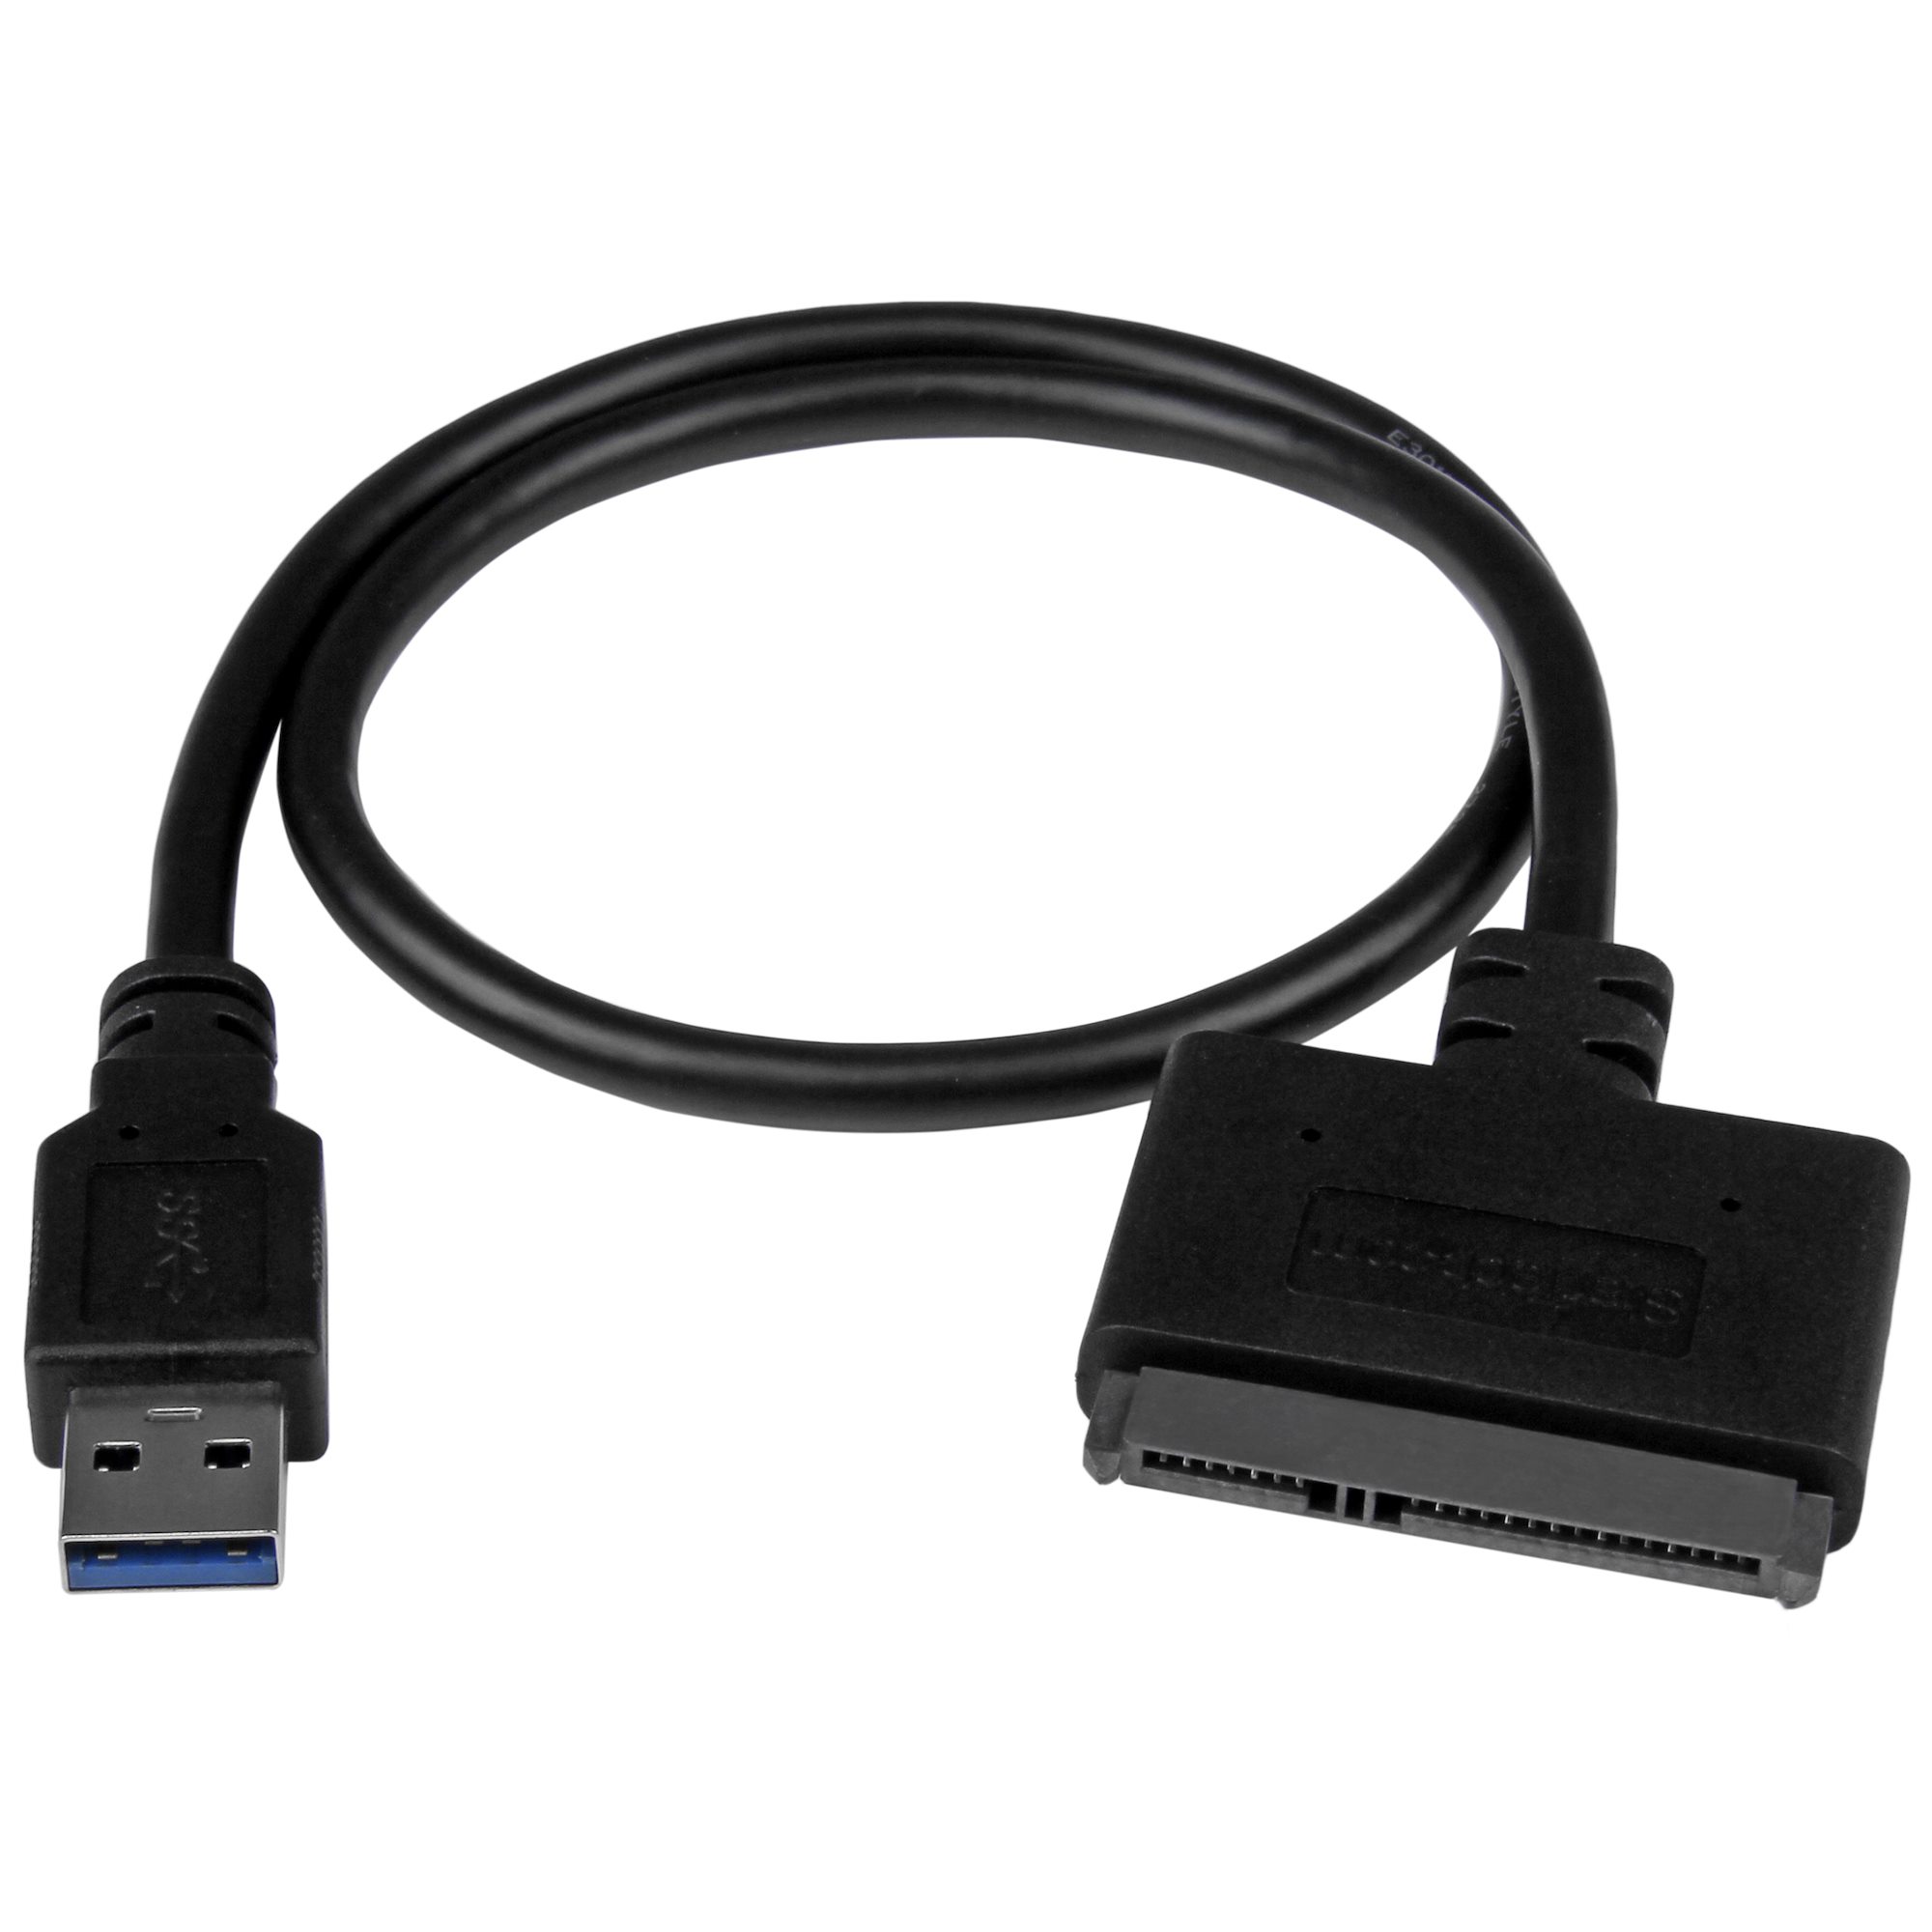 USB 3.0 zu SATA Adapter Kabel für 2,5&3,5 Zoll externe HDD SSD Festplatte Kabel 